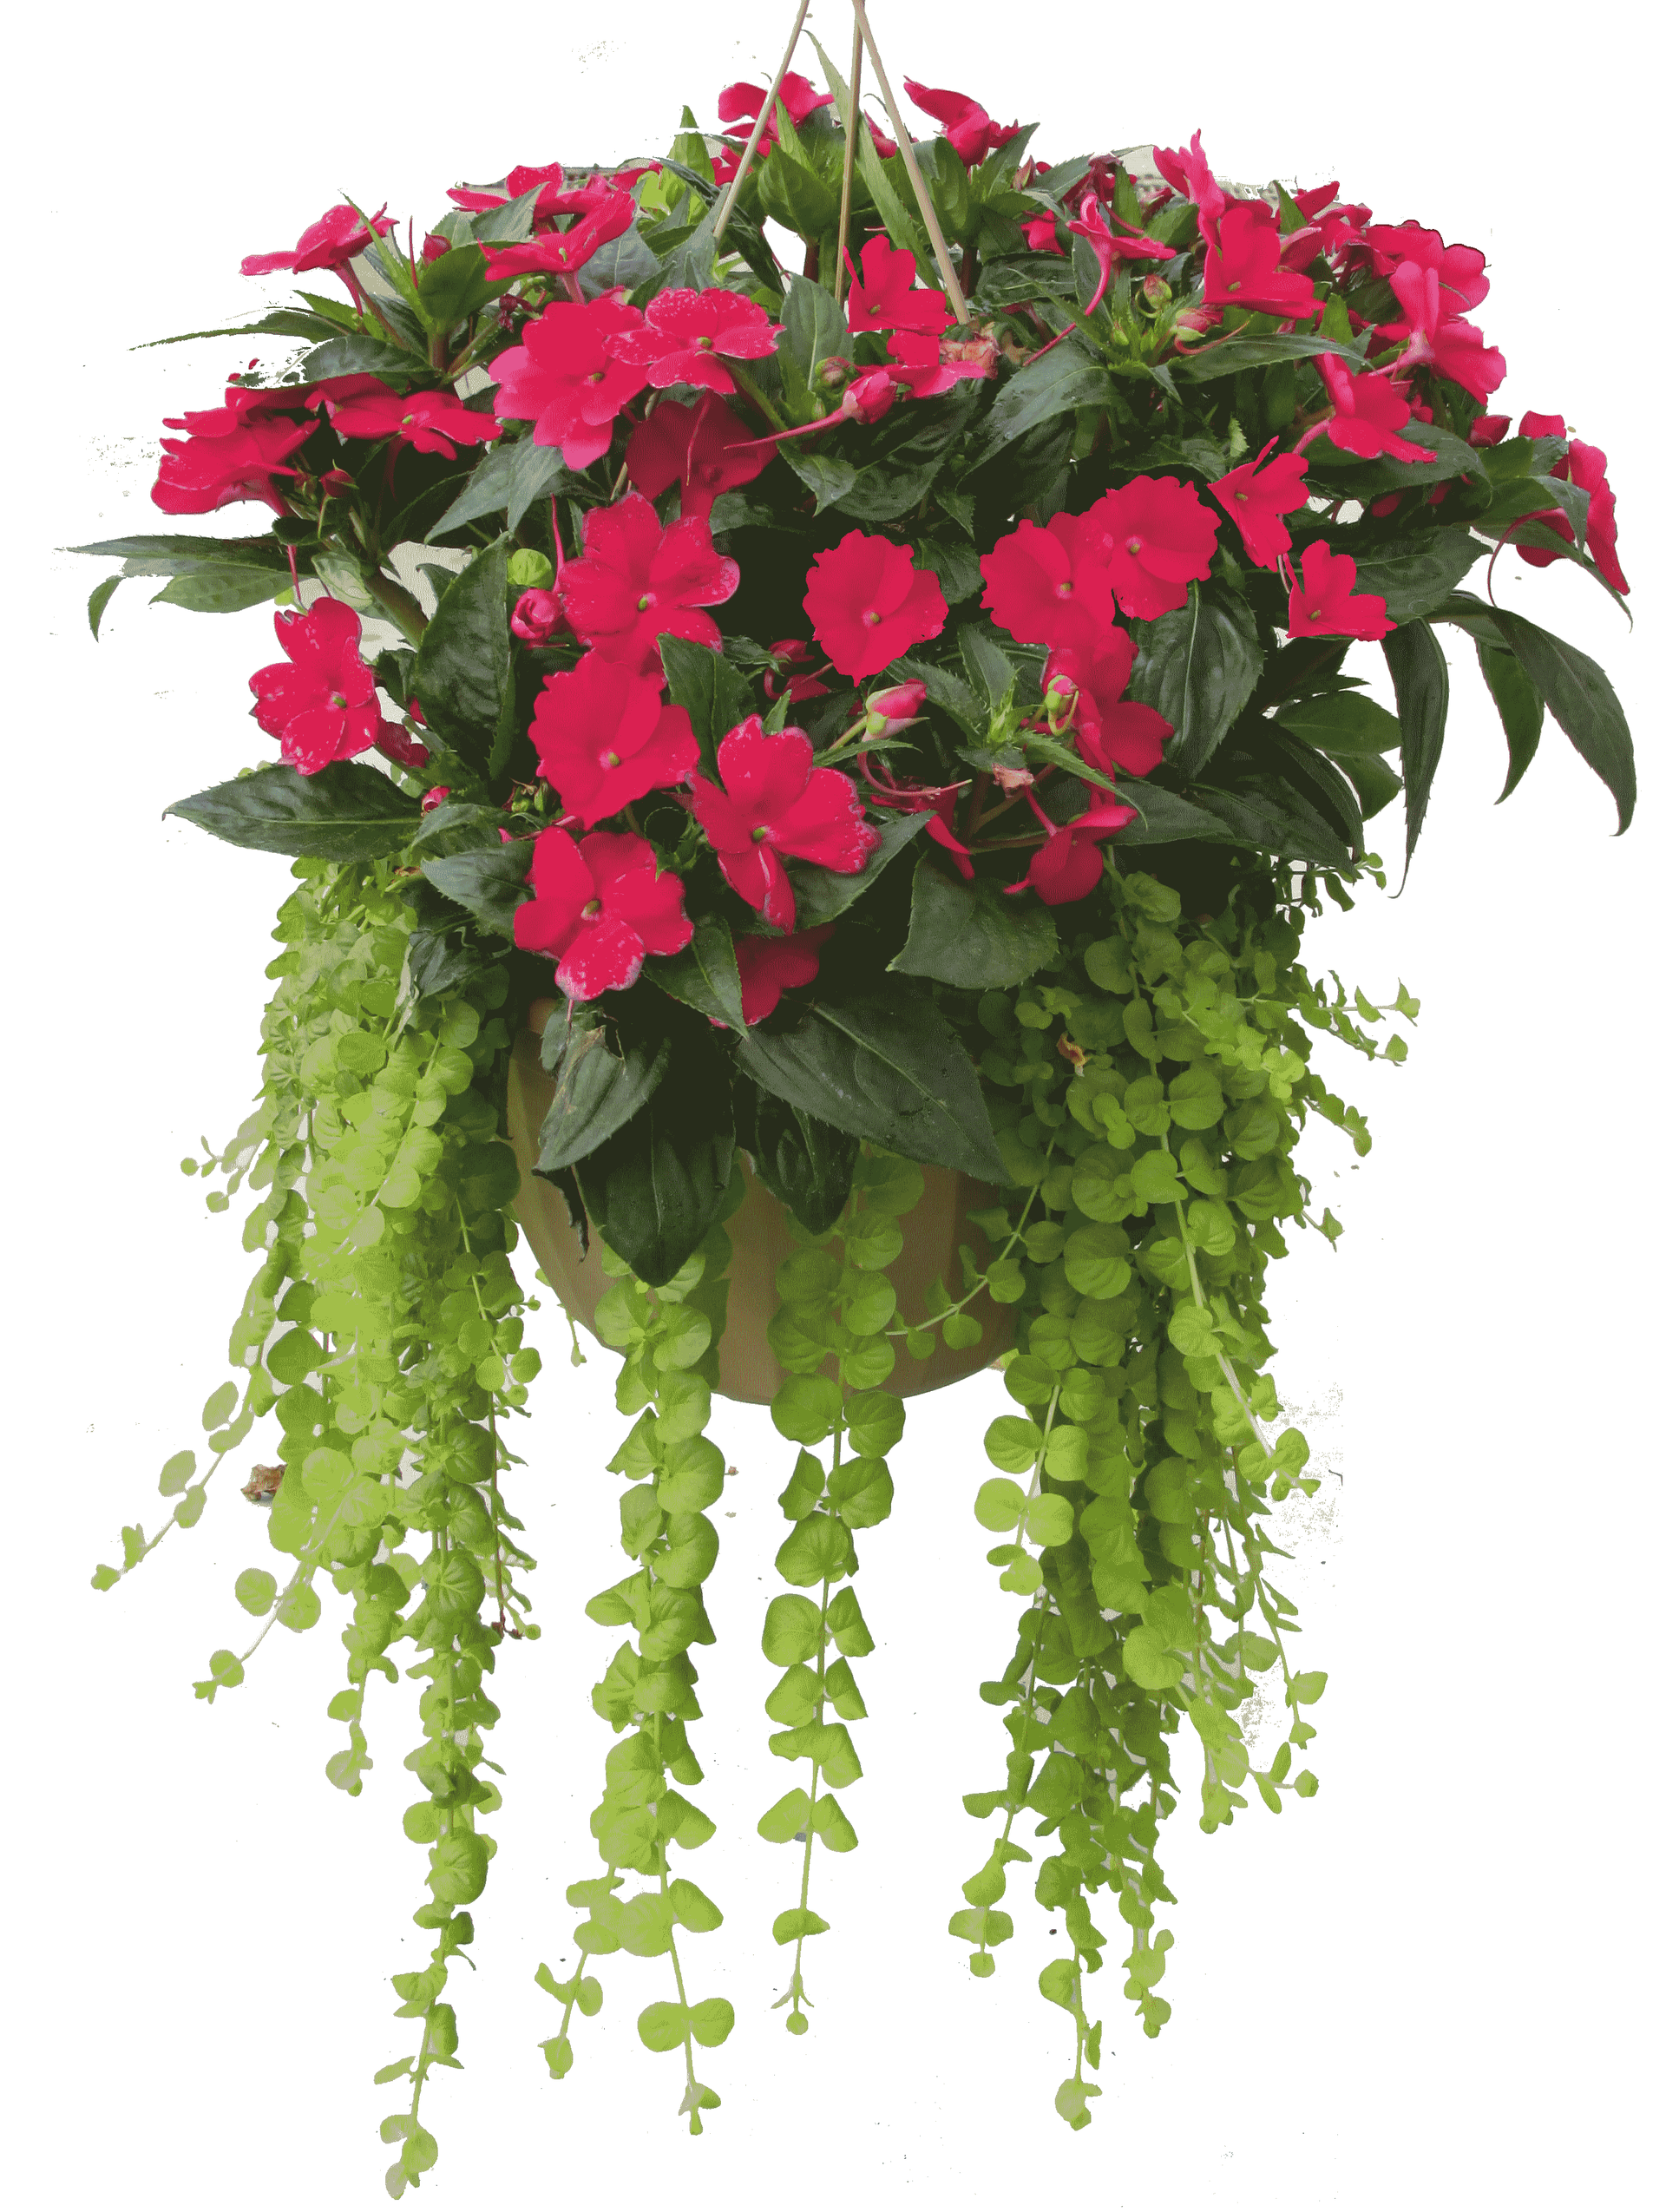 Red Impatiens Sunpatiens Hanging Basket flowers for sale in Lebanon PA